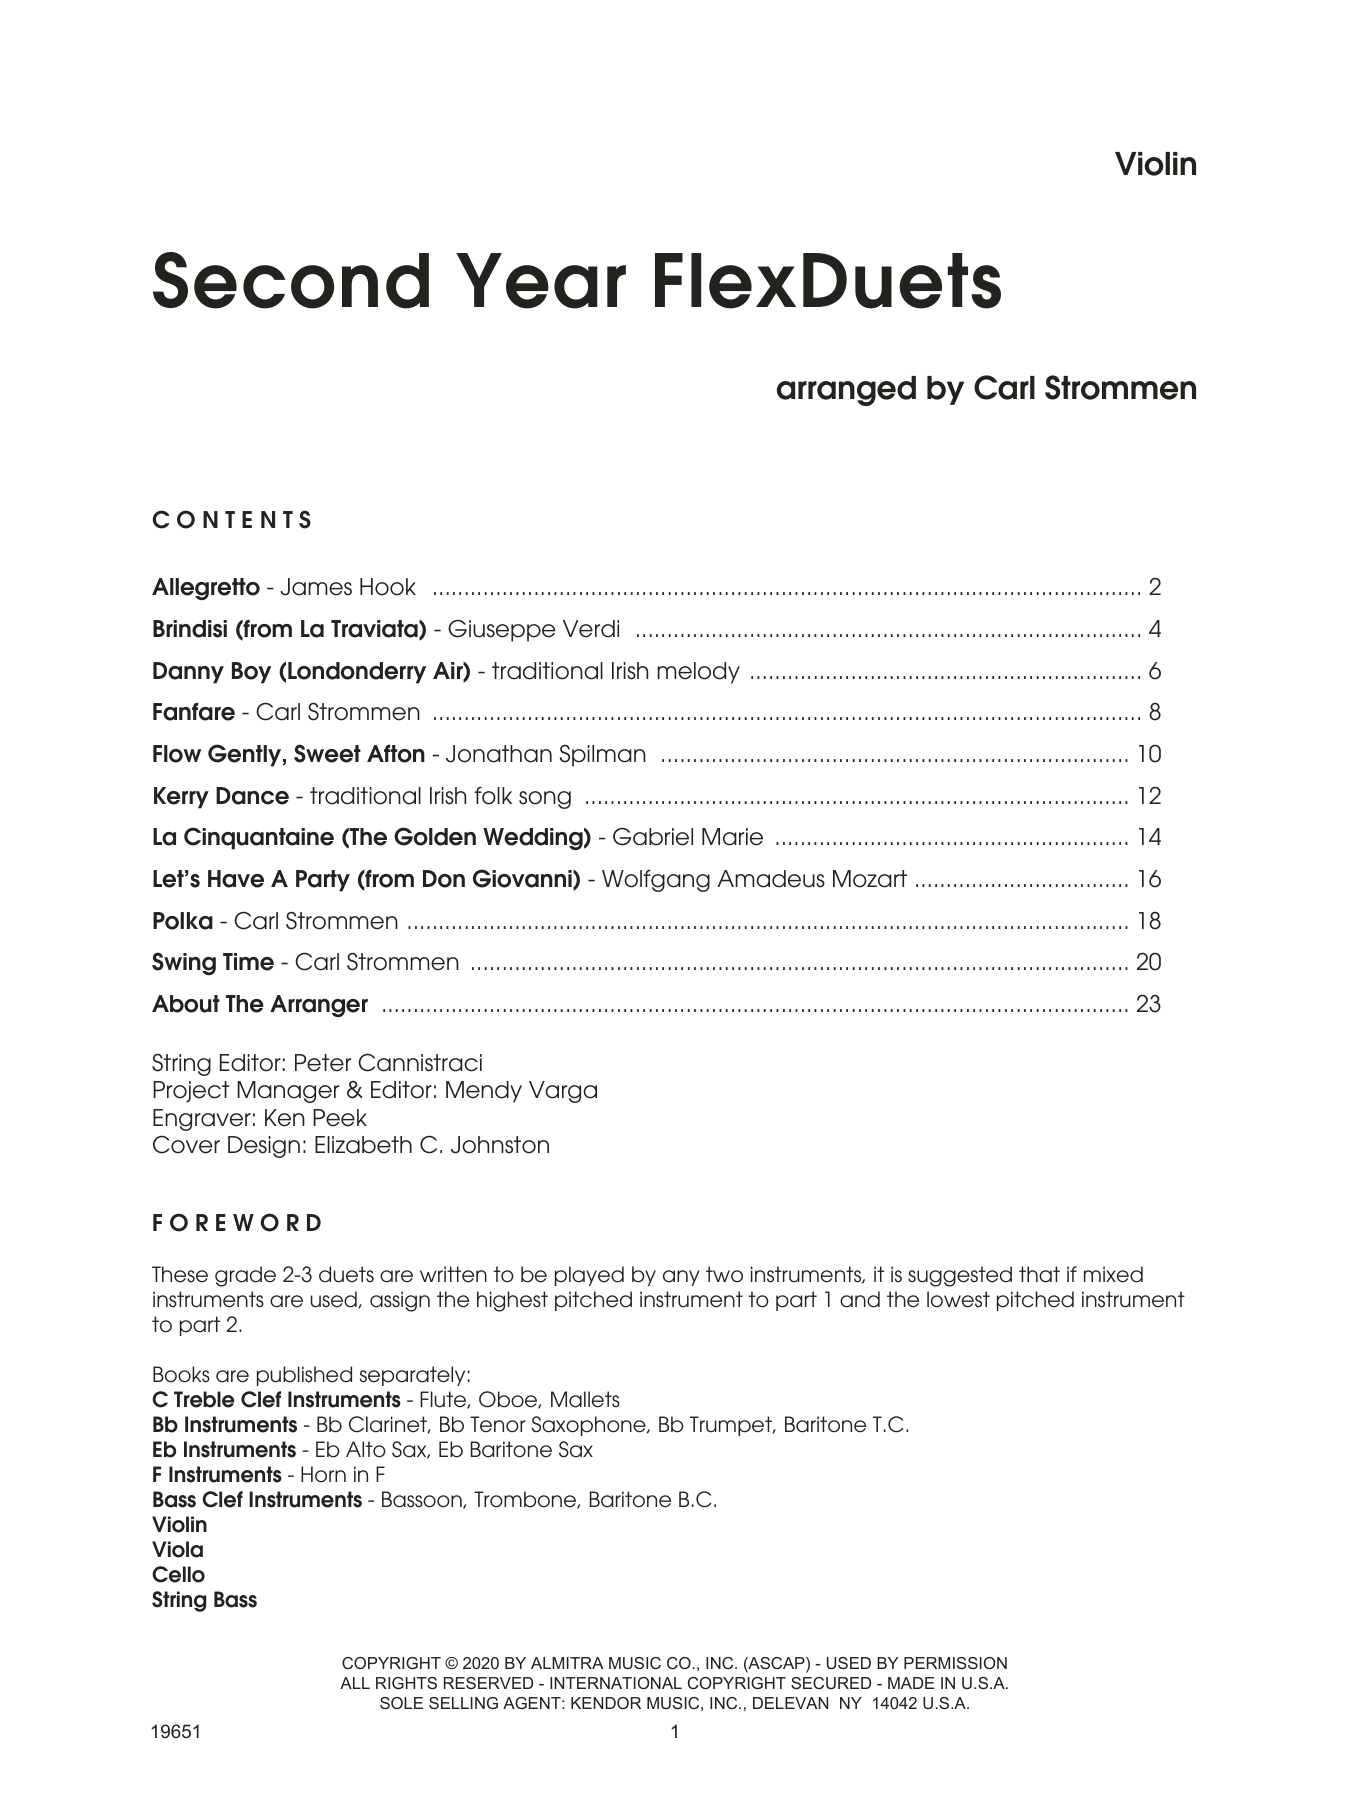 Download Carl Strommen Second Year FlexDuets - Violin Sheet Music